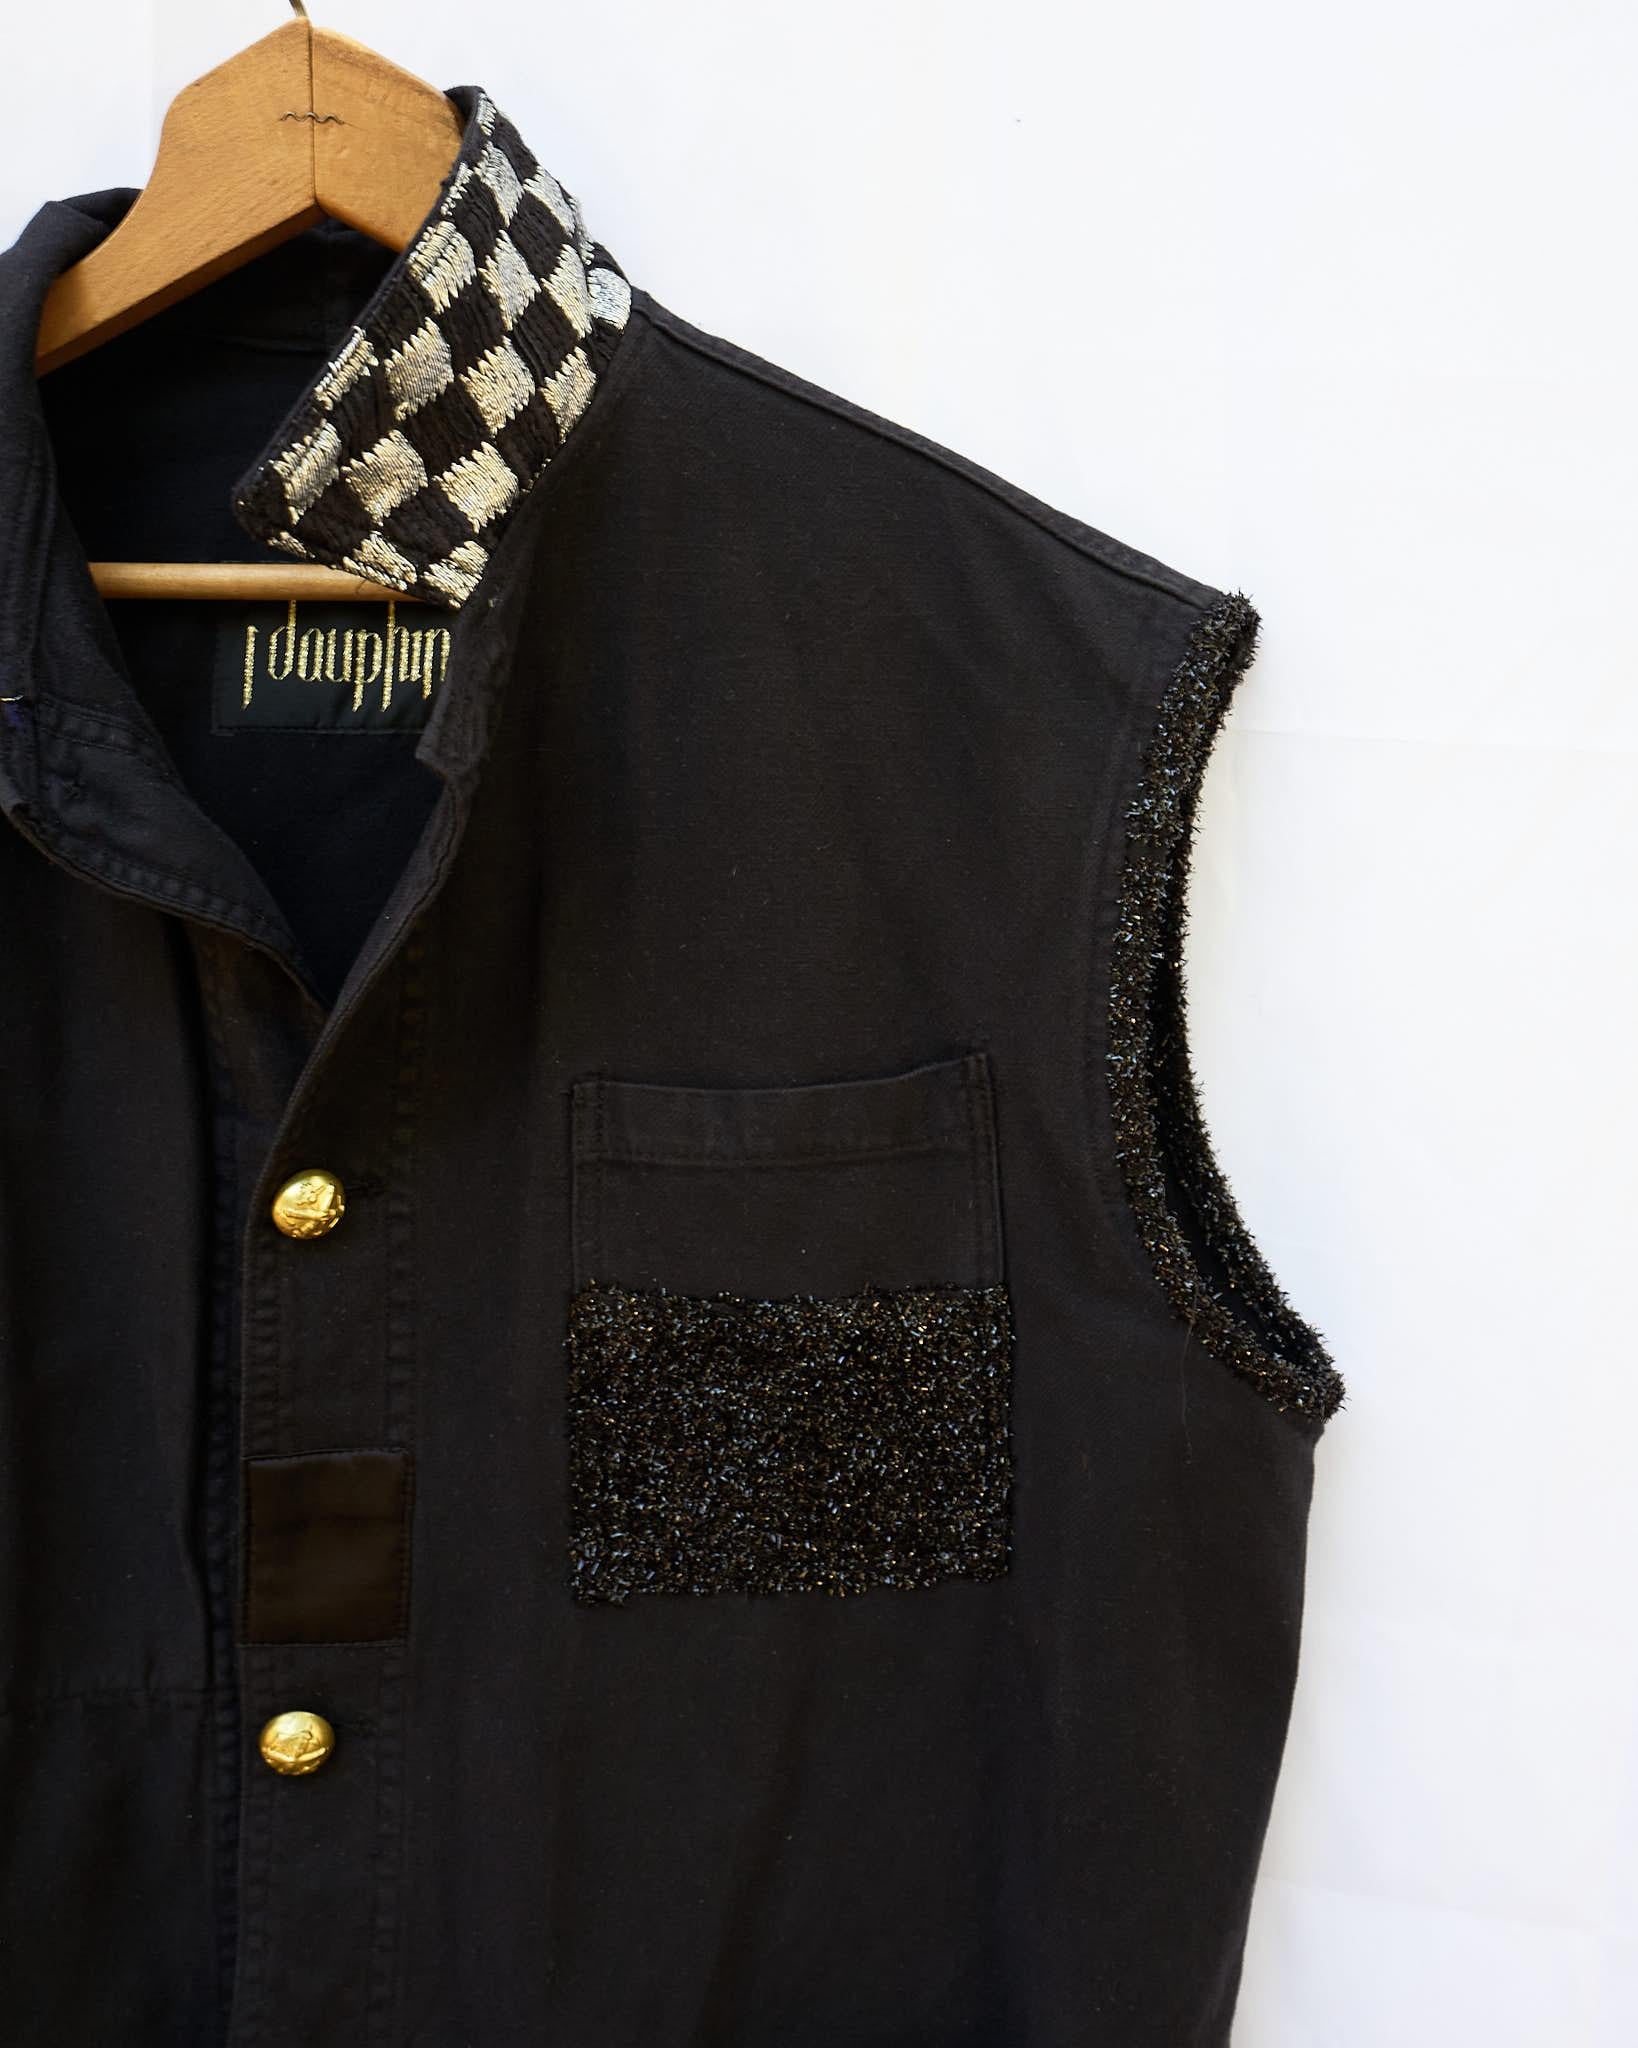 Women's Sleeveless Jacket Vest Black Crystal Embellished Gold Buttons J Dauphin